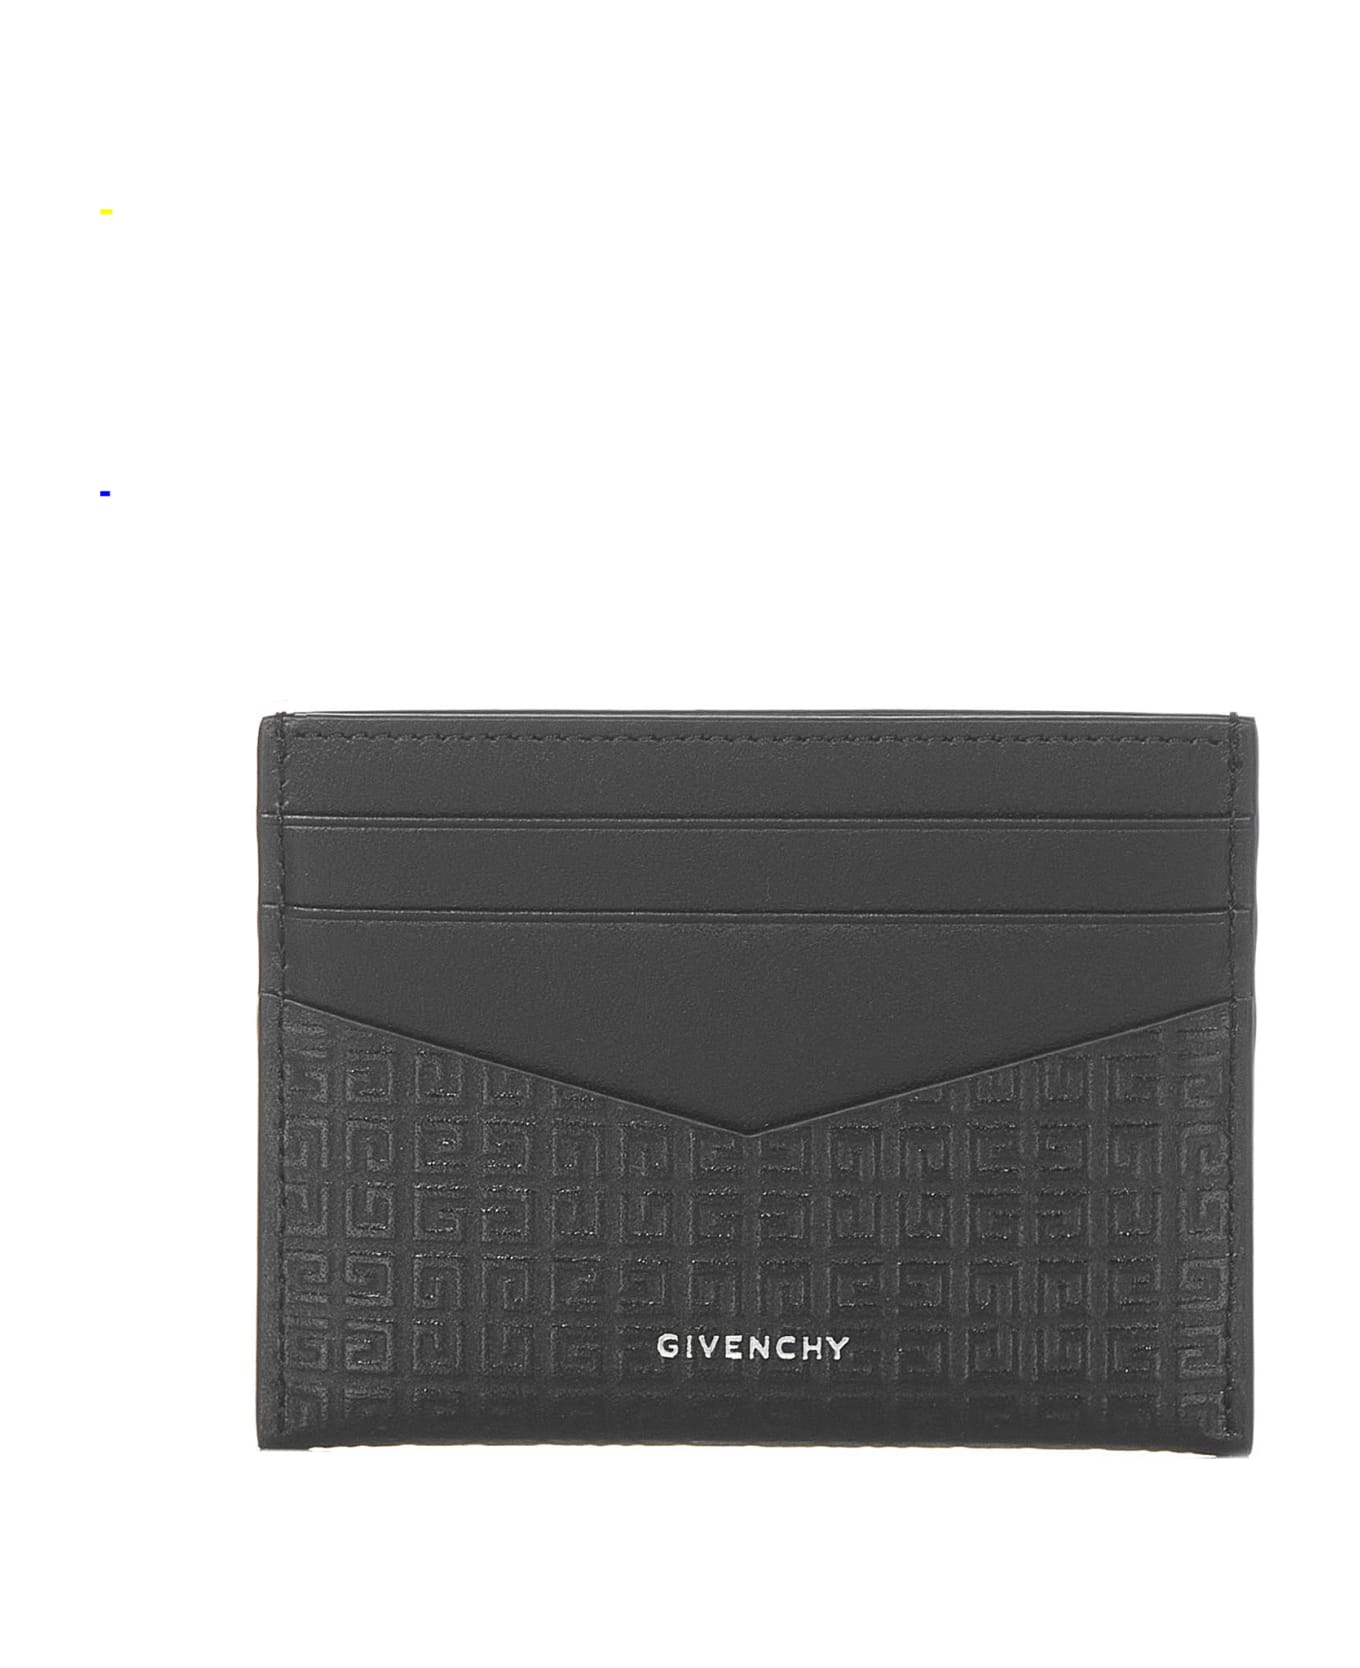 Givenchy Card Holder - NERO